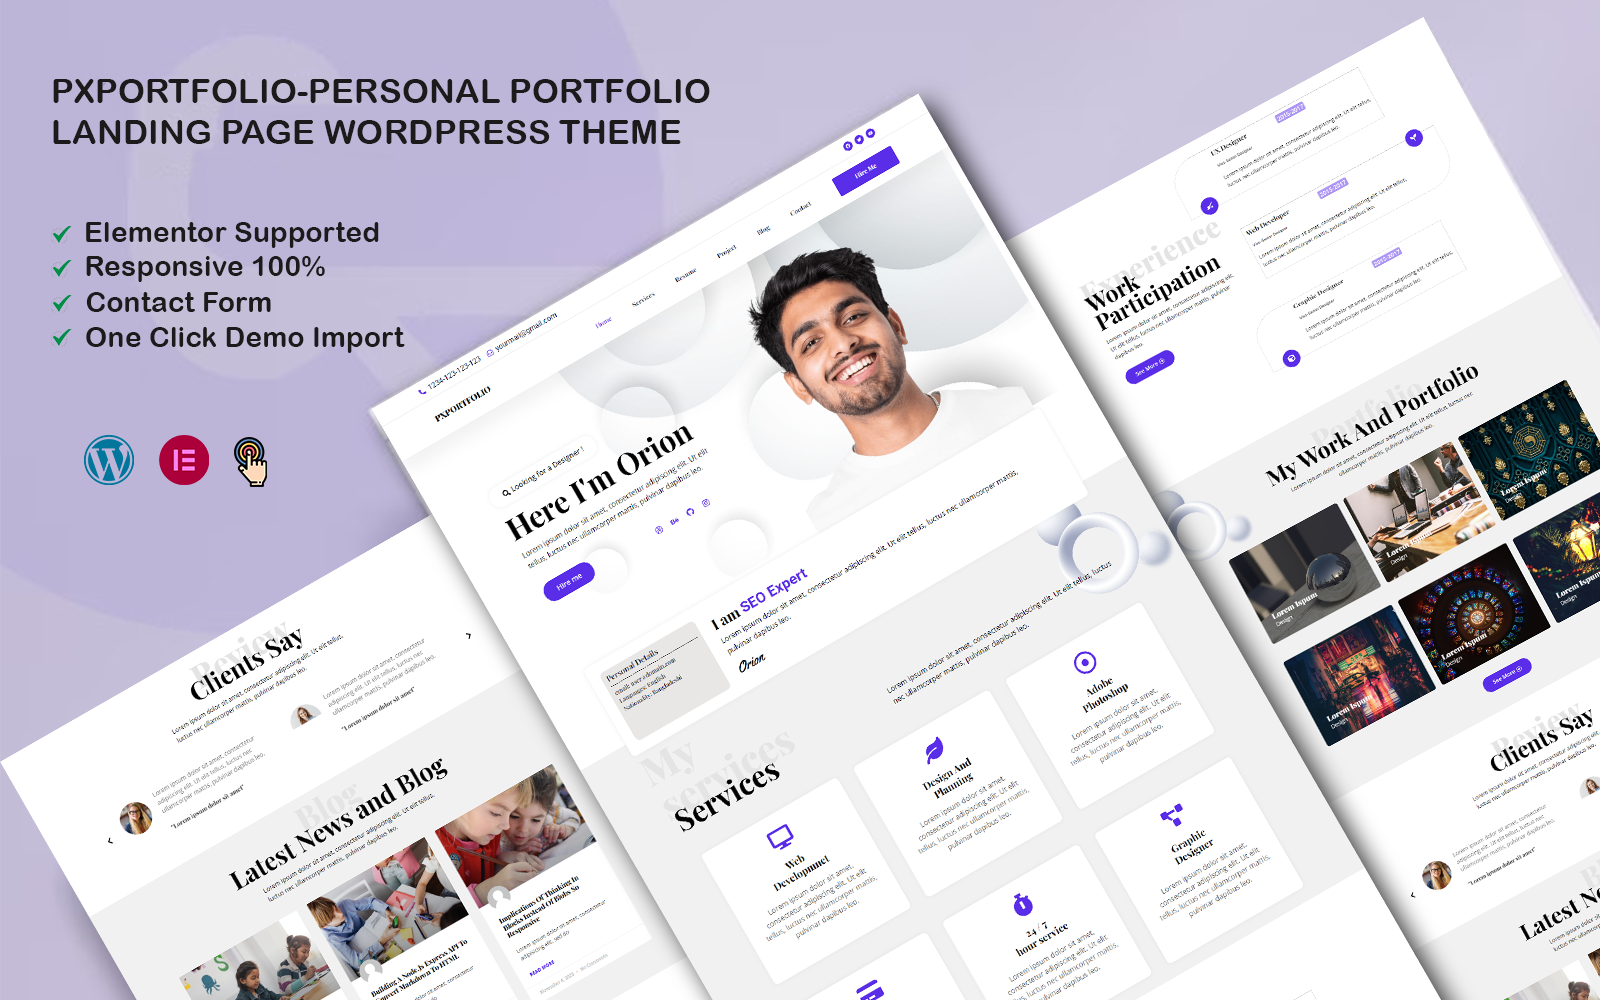 Pxportfolio – Personal Portfolio Landing Page